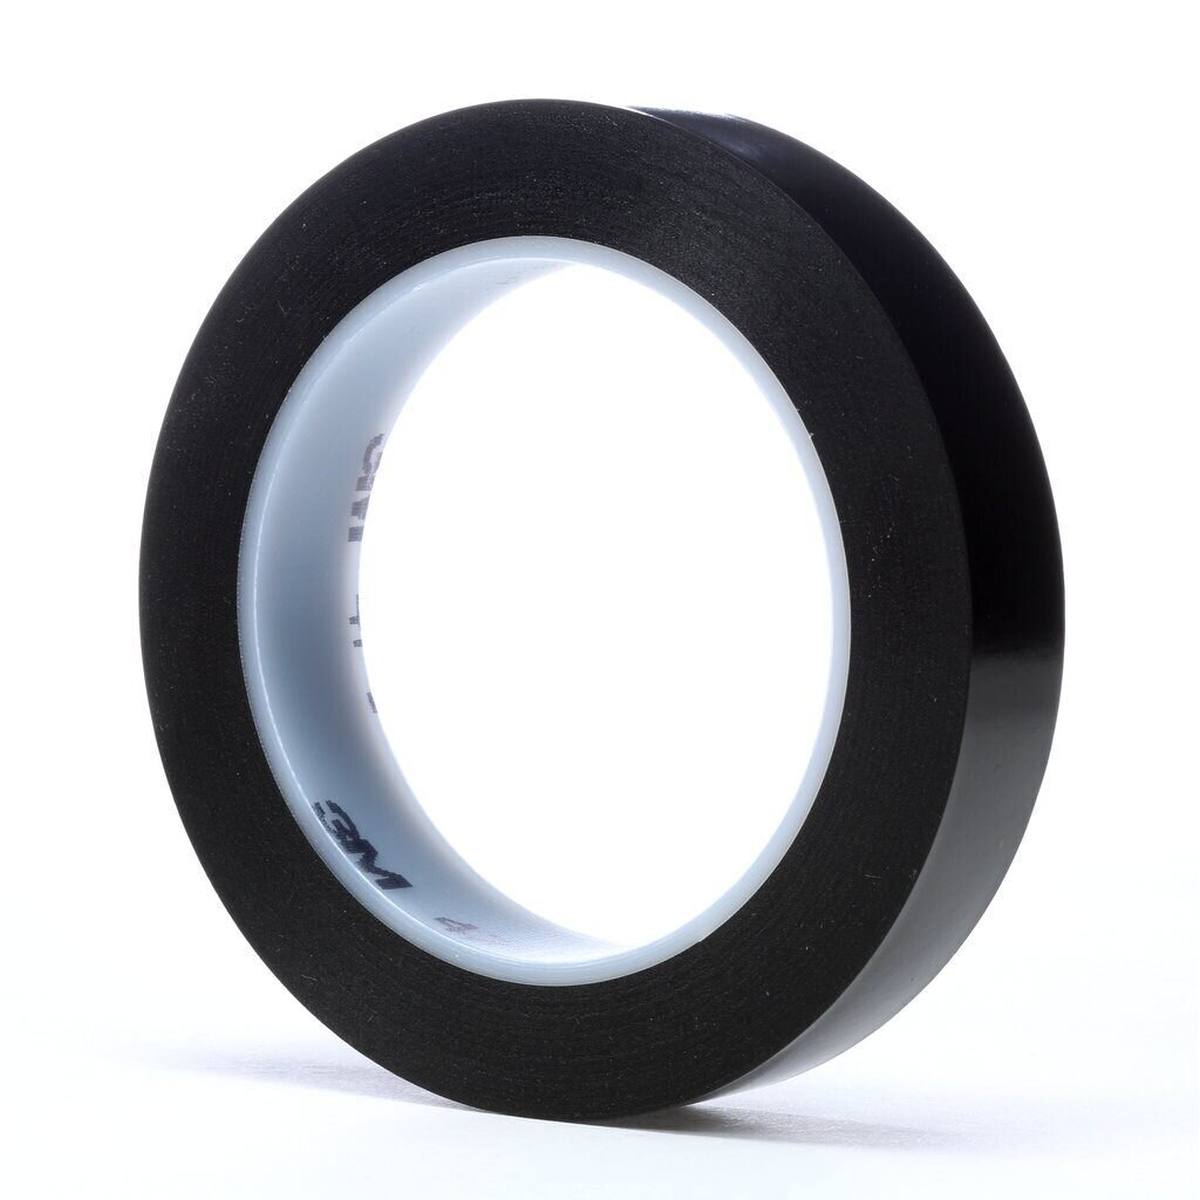 3M soft PVC adhesive tape 471 F, black, 19 mm x 33 m, 0.13 mm